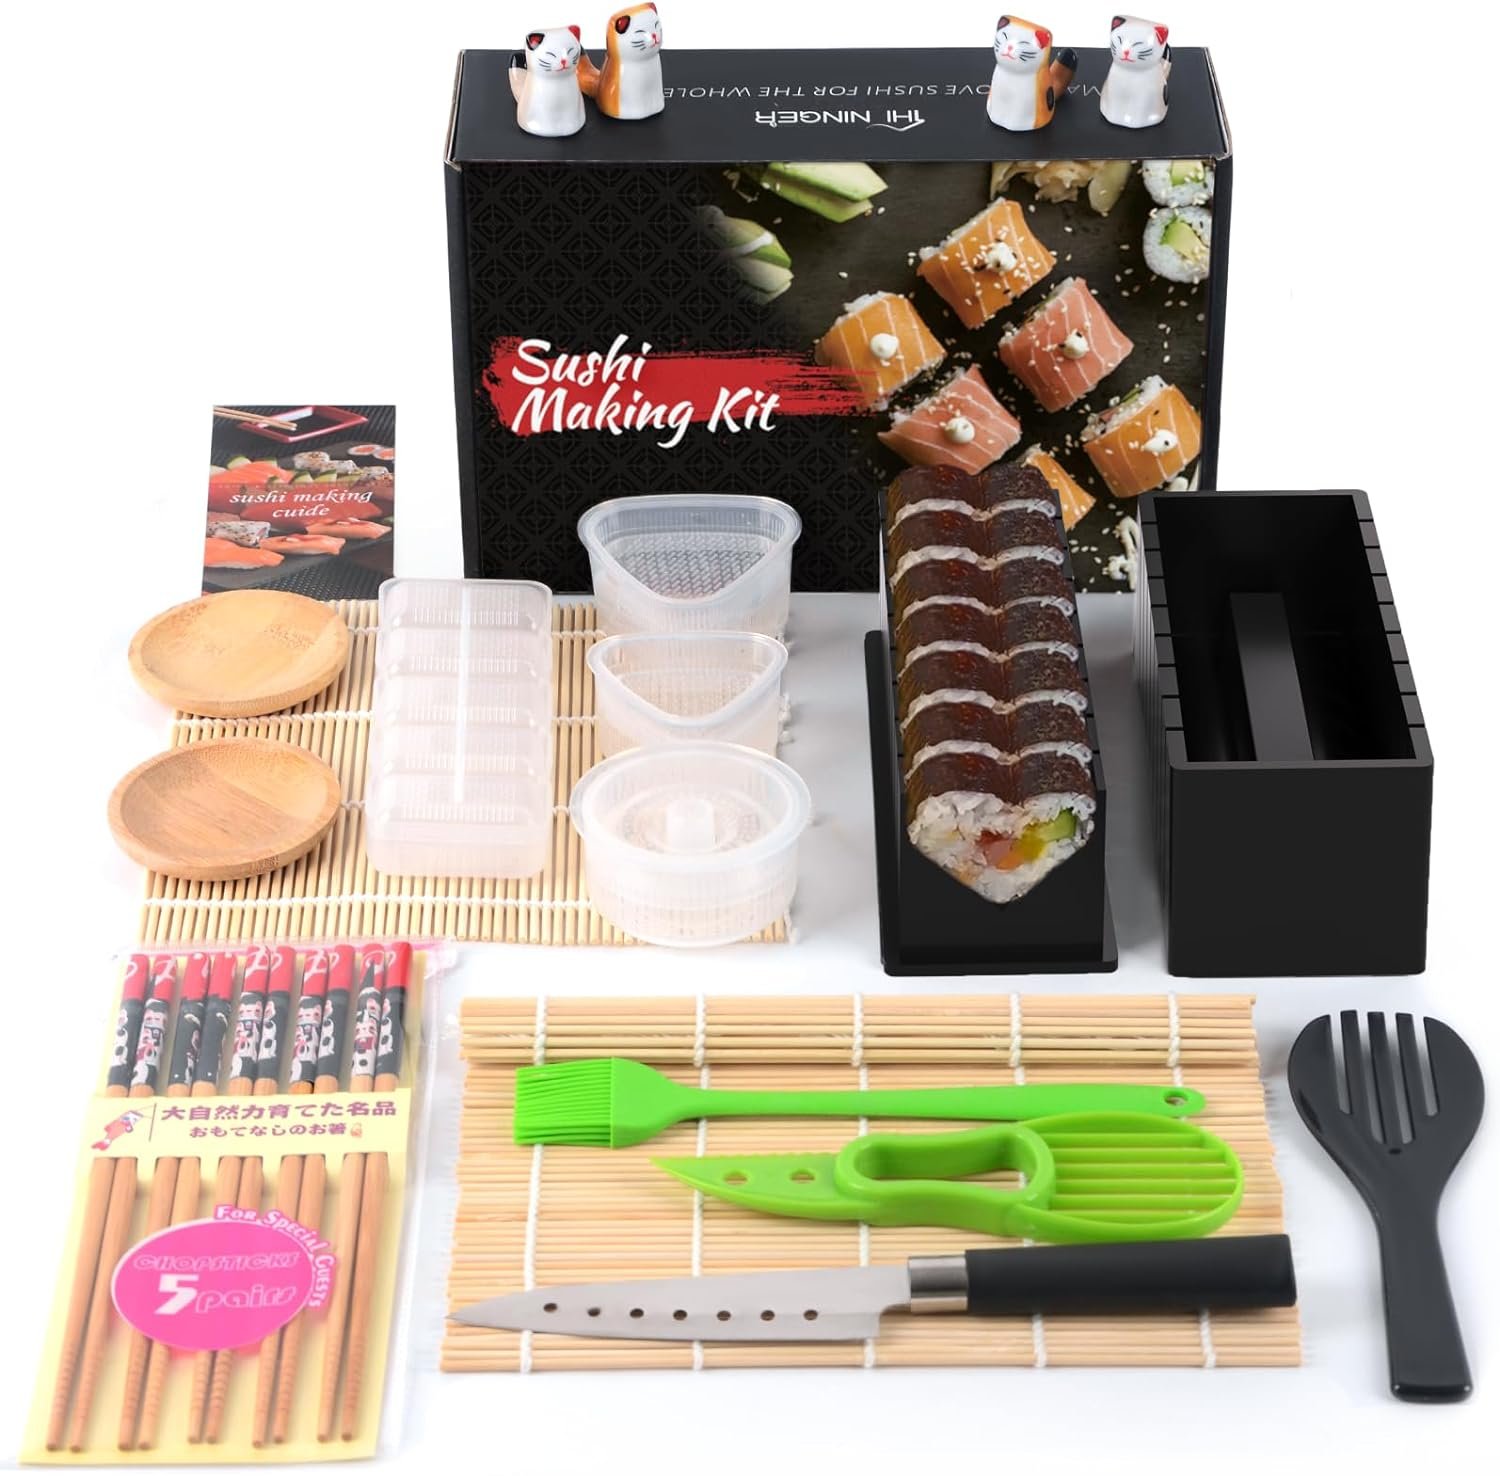 HI NINGER Sushi Making Kit Deluxe Edition Complete Sushi Maker Kit 12PCS Home Sushi Mold Press with Sushi Rice Roll Mold Shapes,Fork, Sushi Knife,Sushi Rolling Mat,Chopsticks